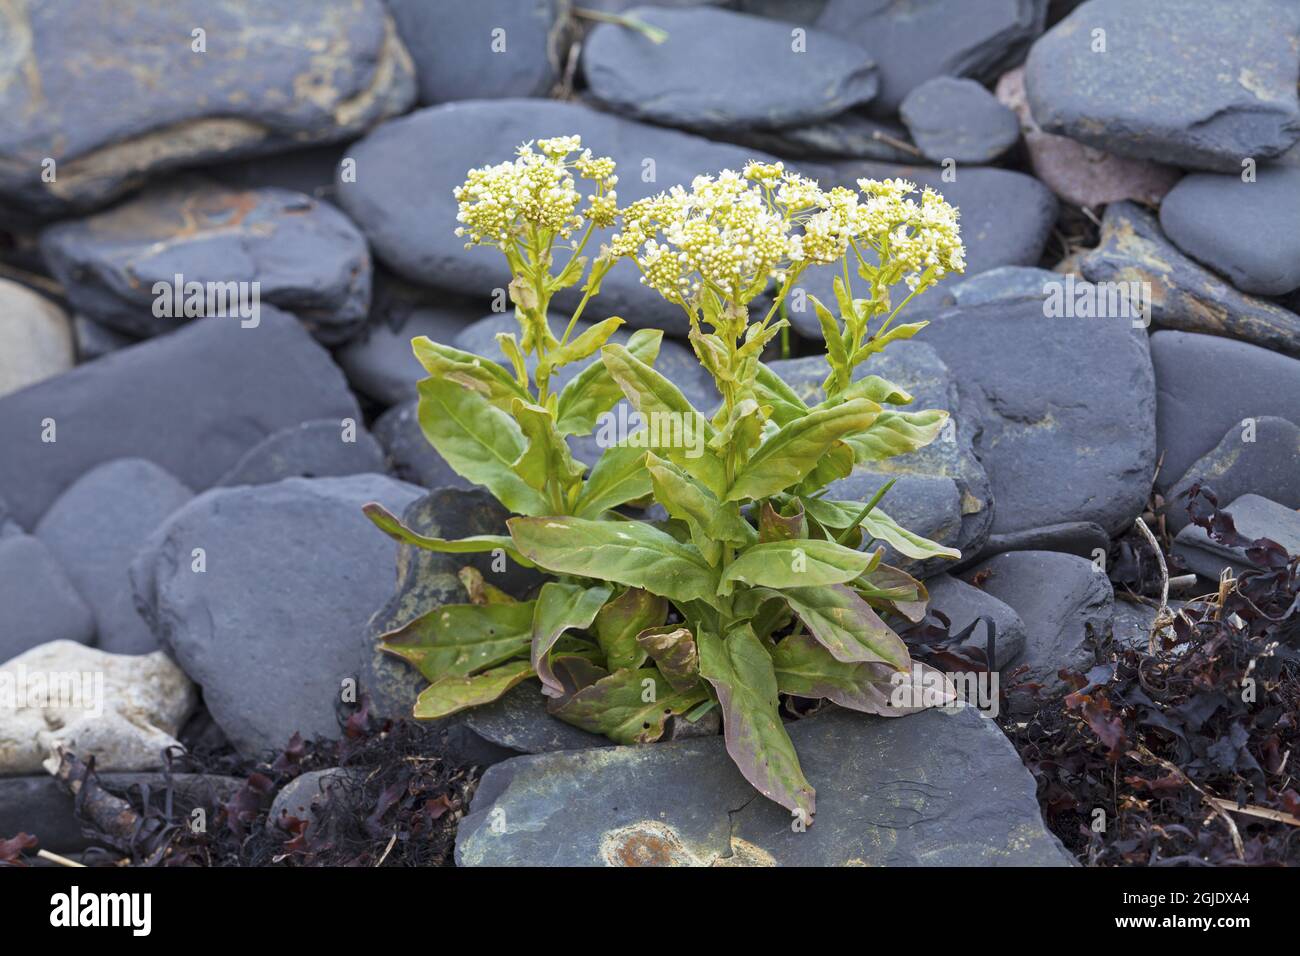 Hoary Cress, Cardaria draba, Lepidium draba Photo: Bengt Ekman / TT / code 2706  Stock Photo